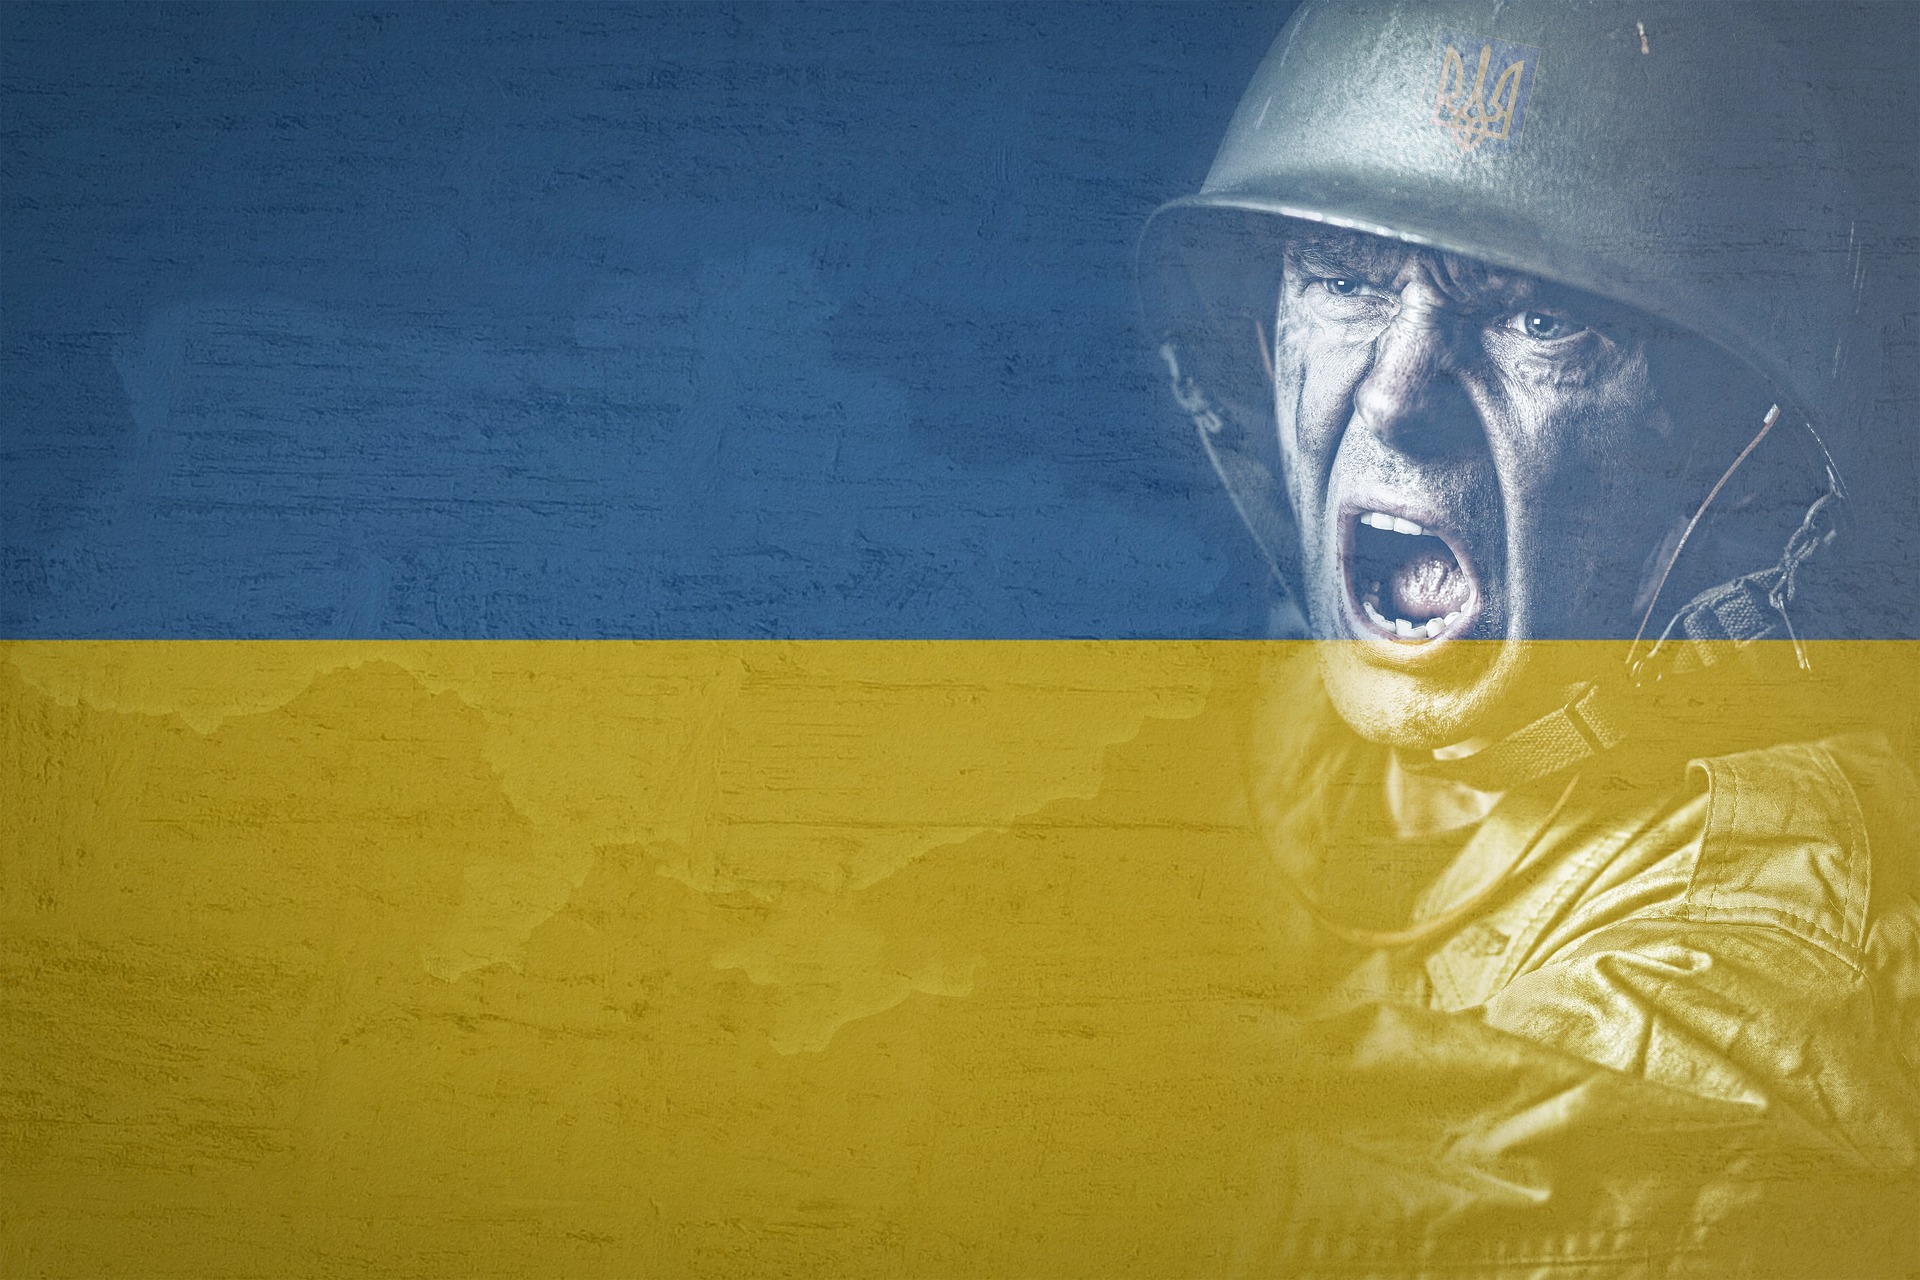 The Ukrainian Offensive